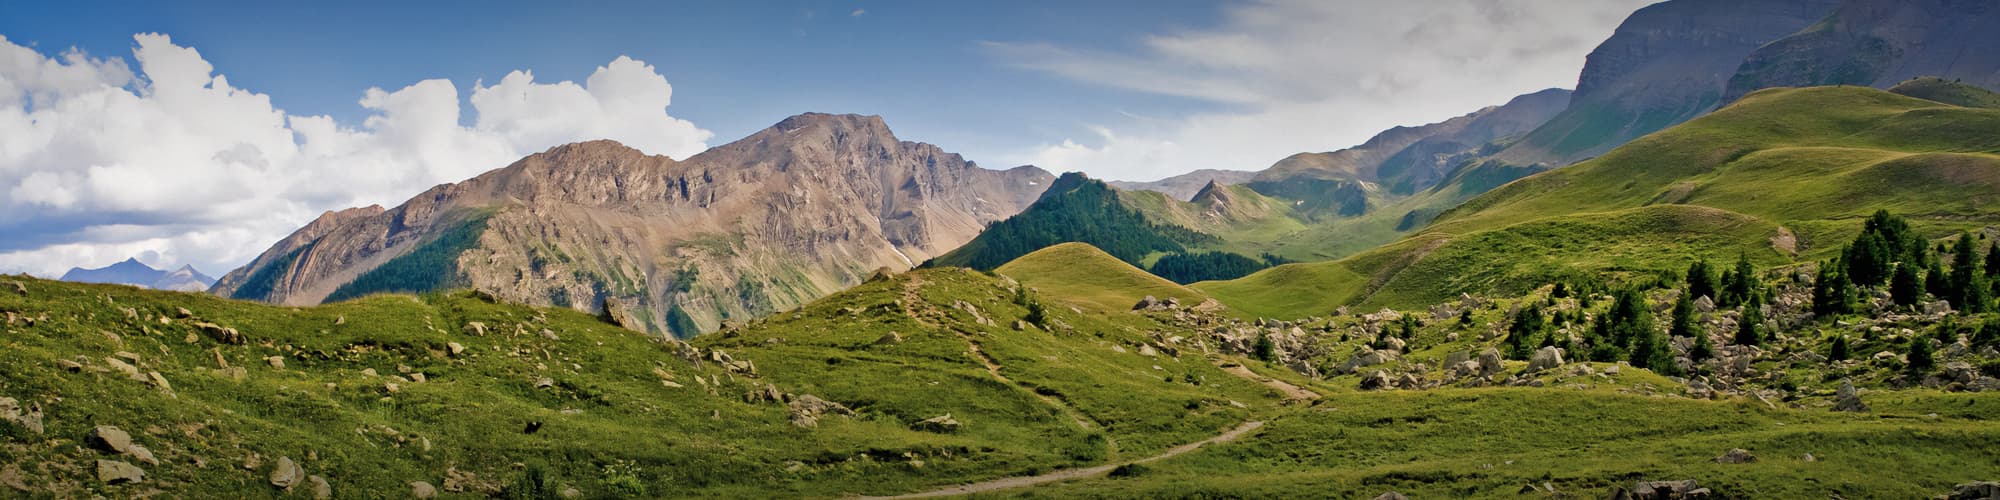 Randonnée Alpes du Sud © Uolir / Adobe Stock